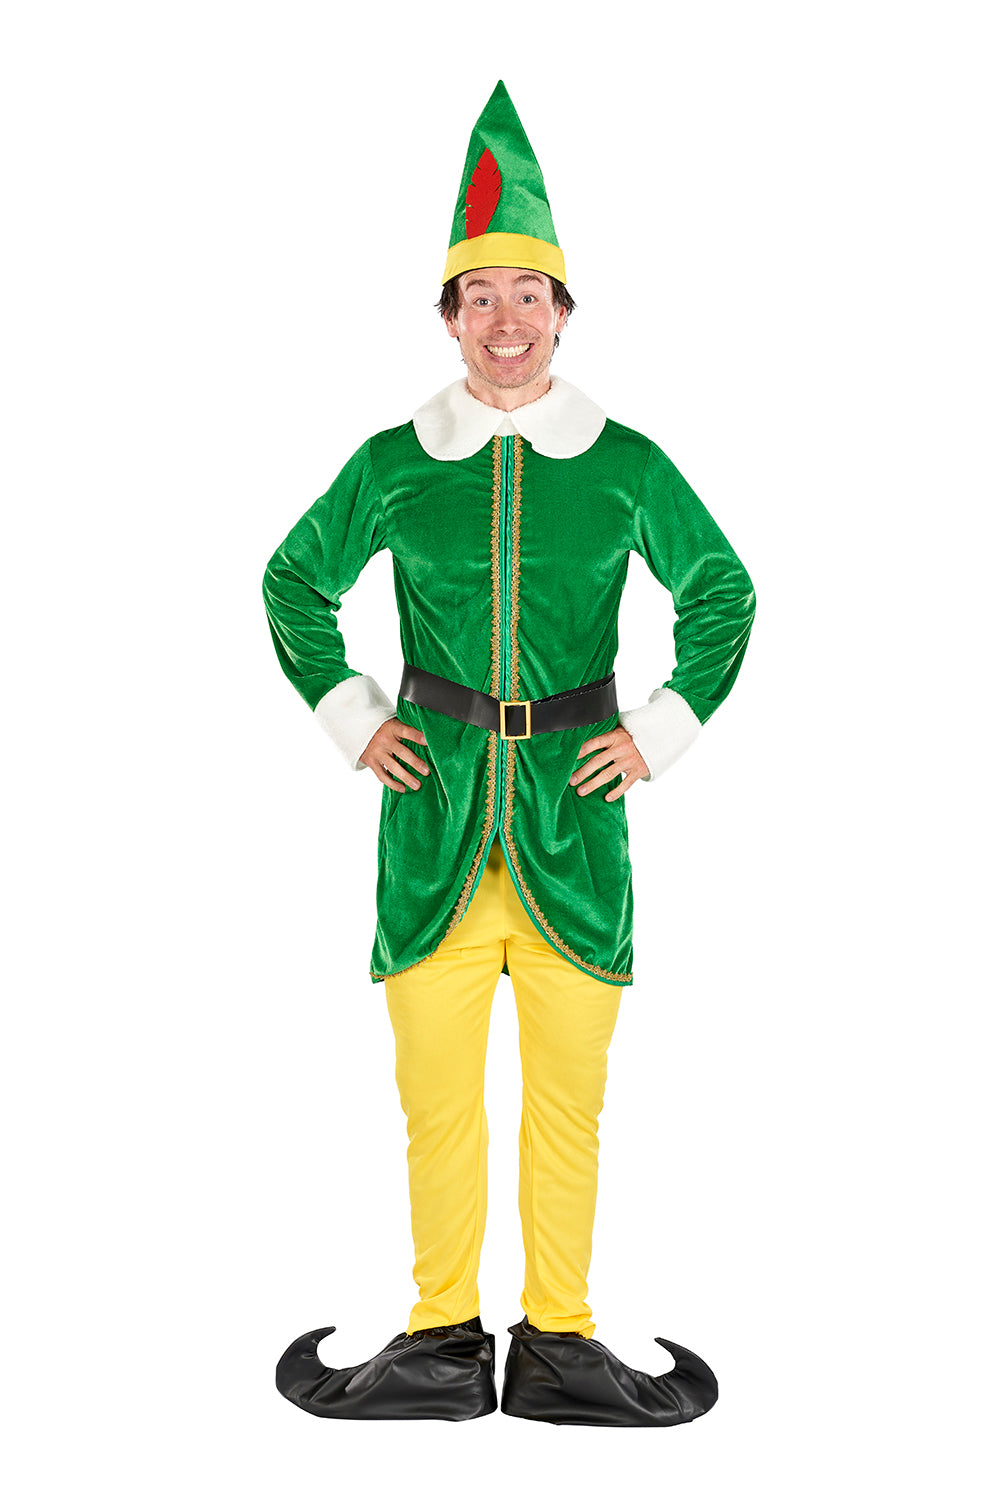 New York Elf Costume